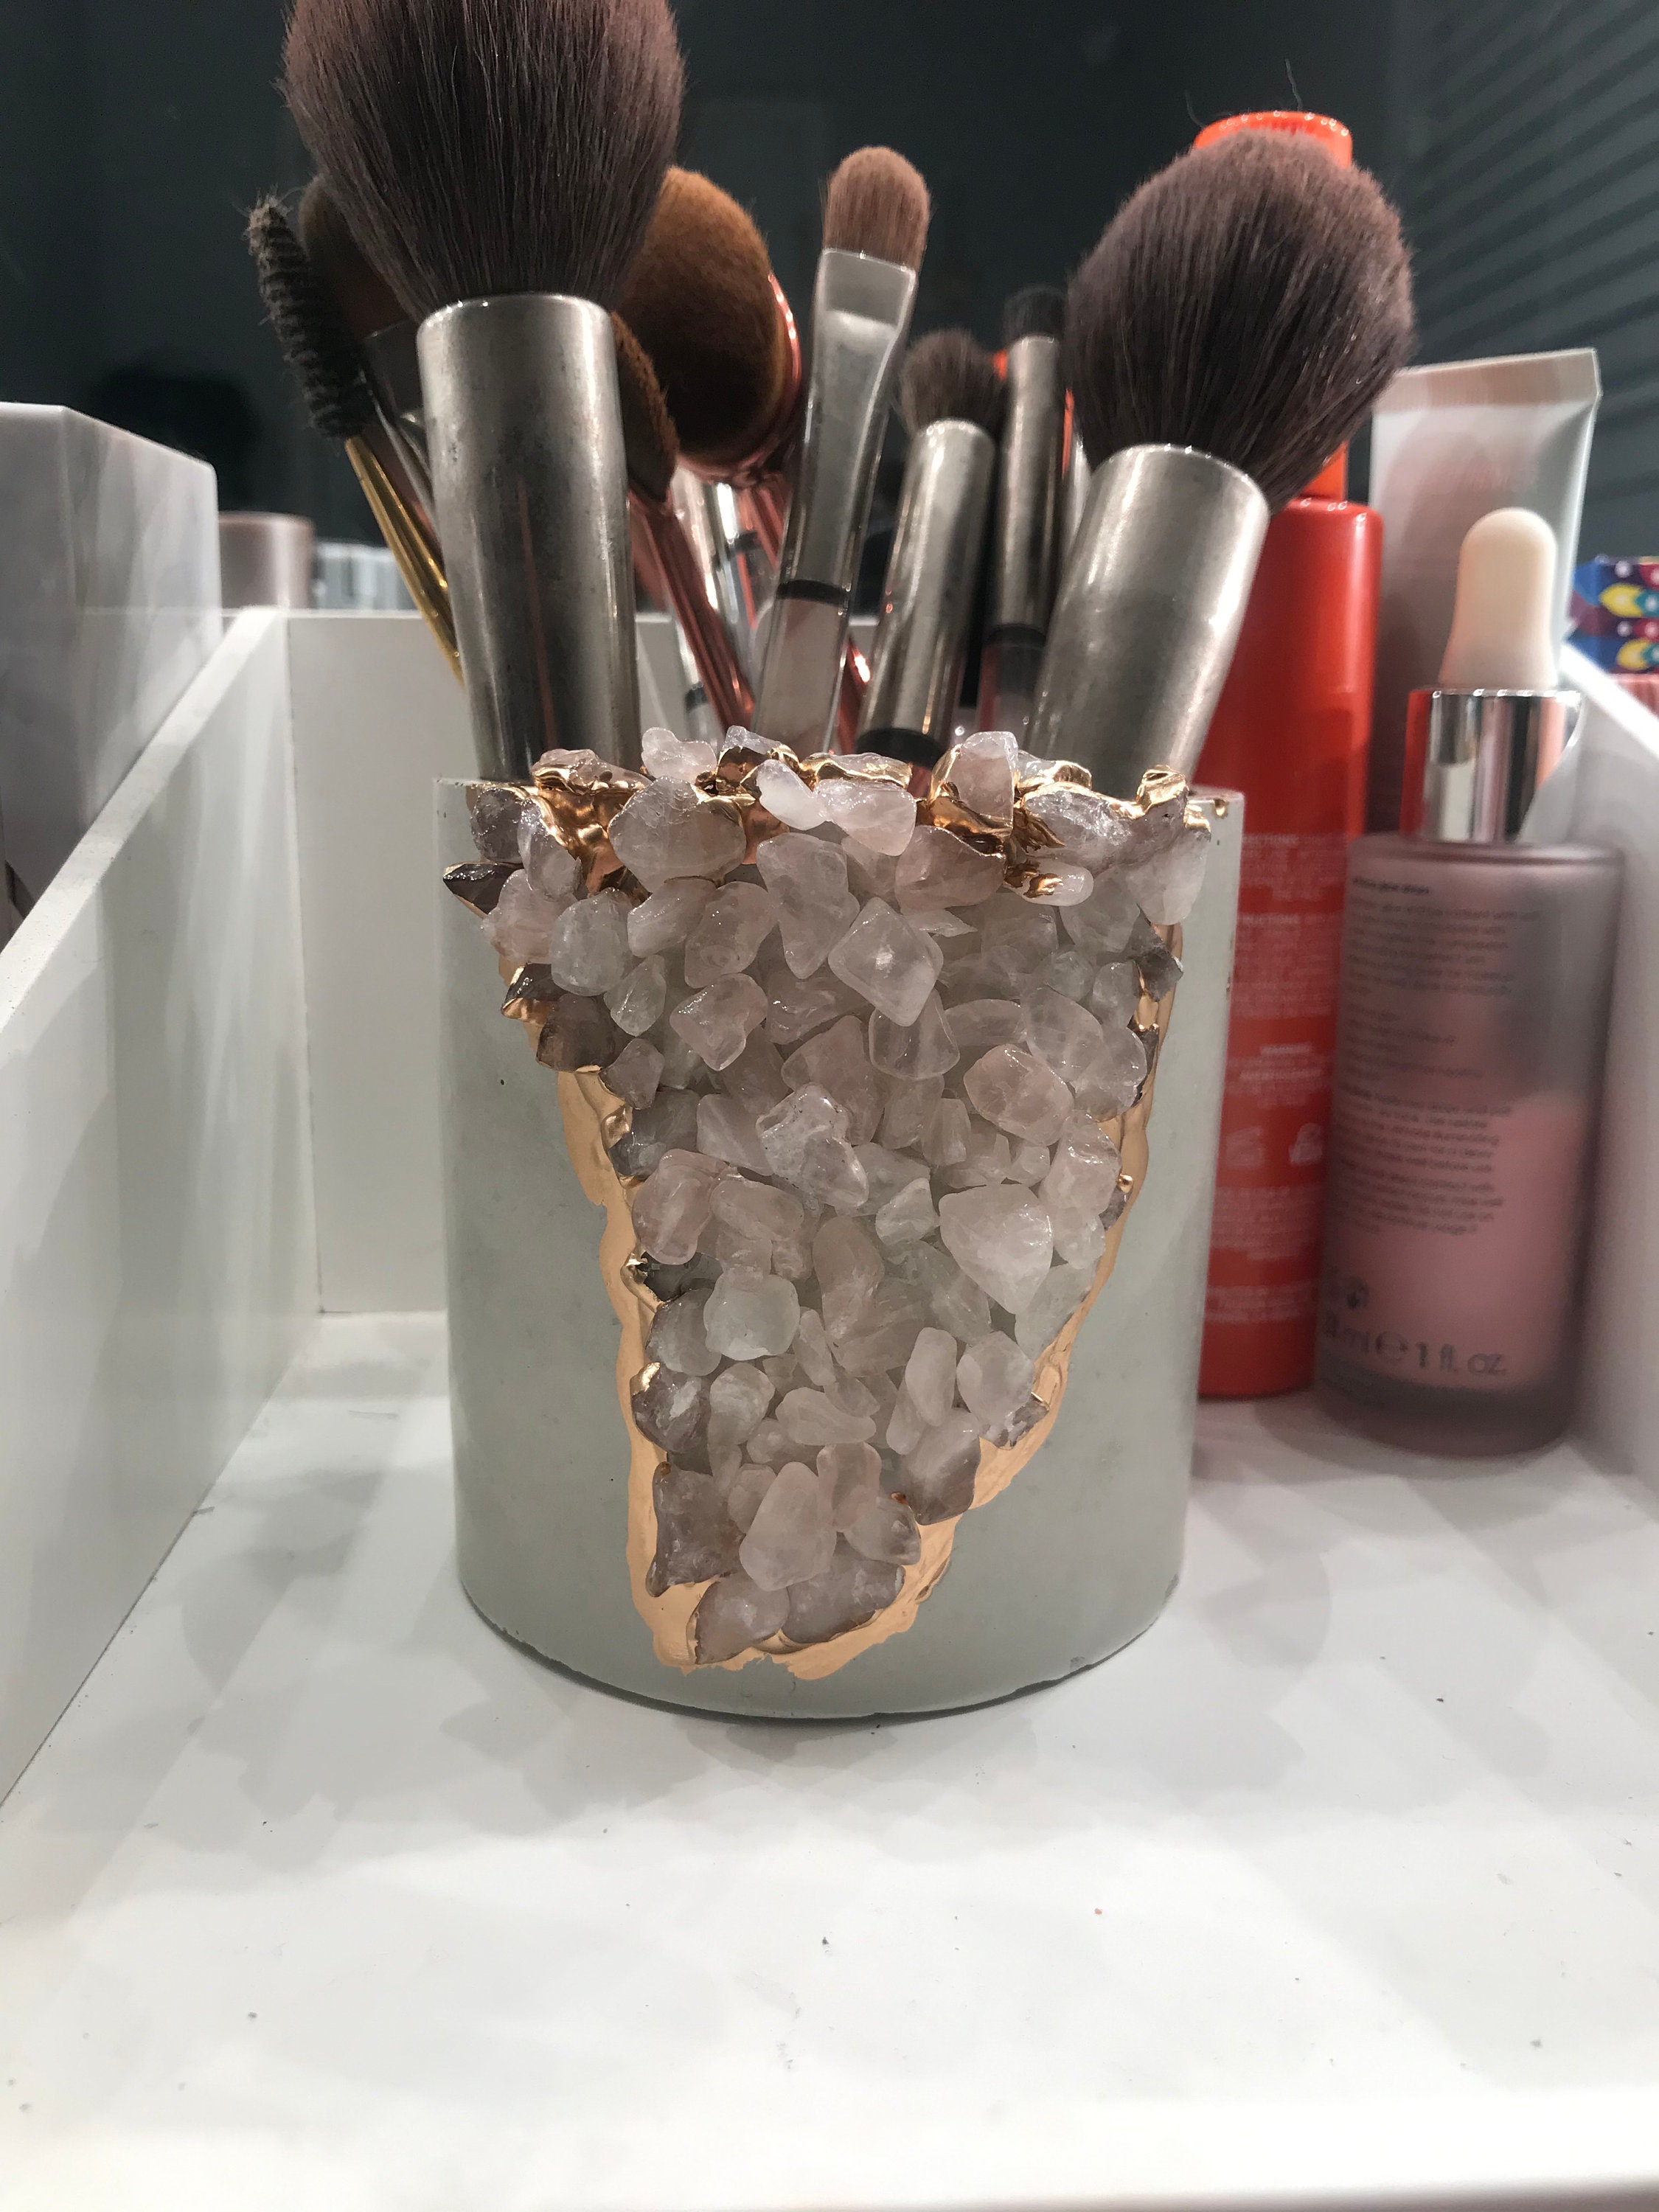  EXCEART Silicone Makeup Brush Storage Box Vanity